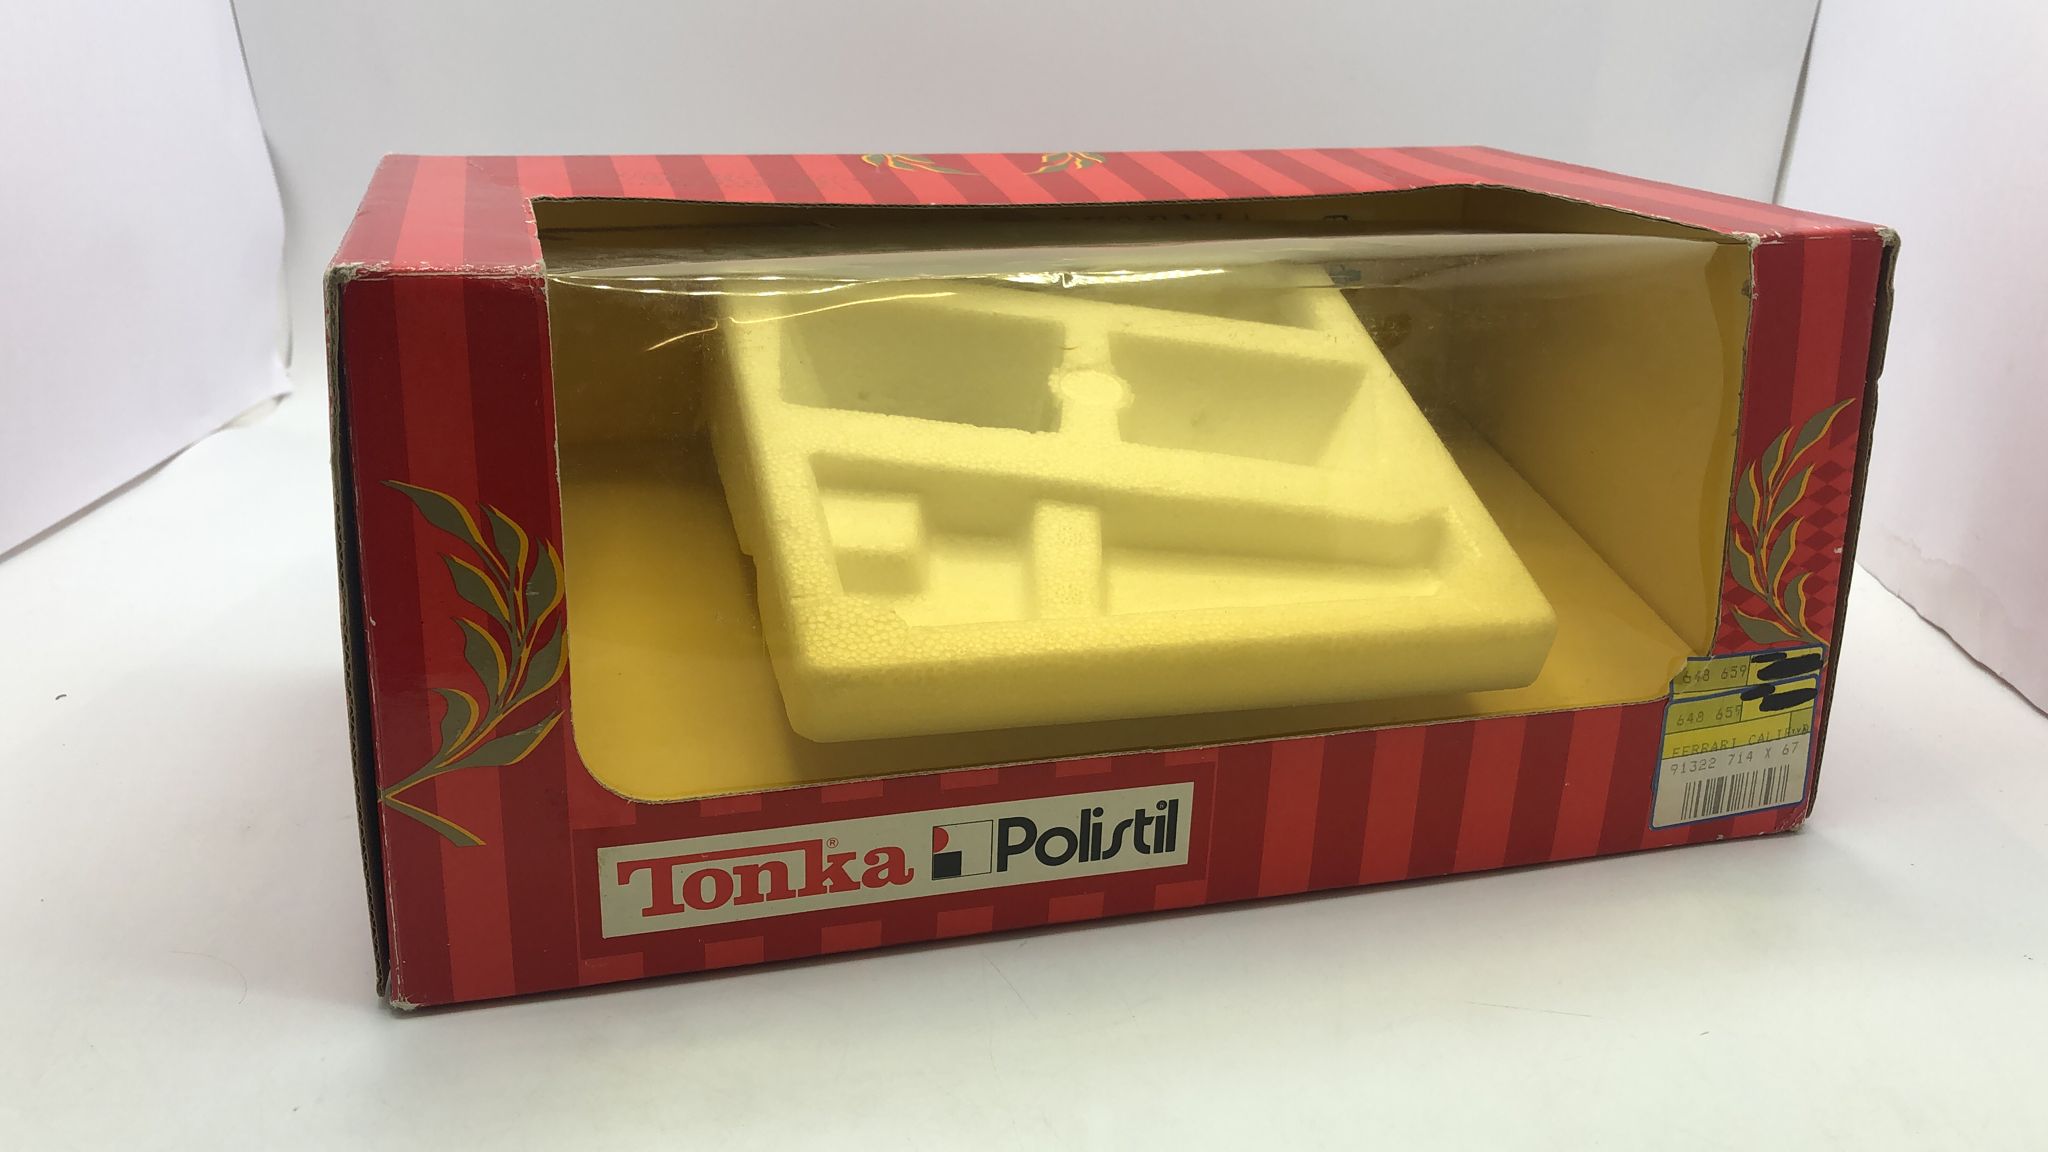 Tonka Polistil scatola vuota